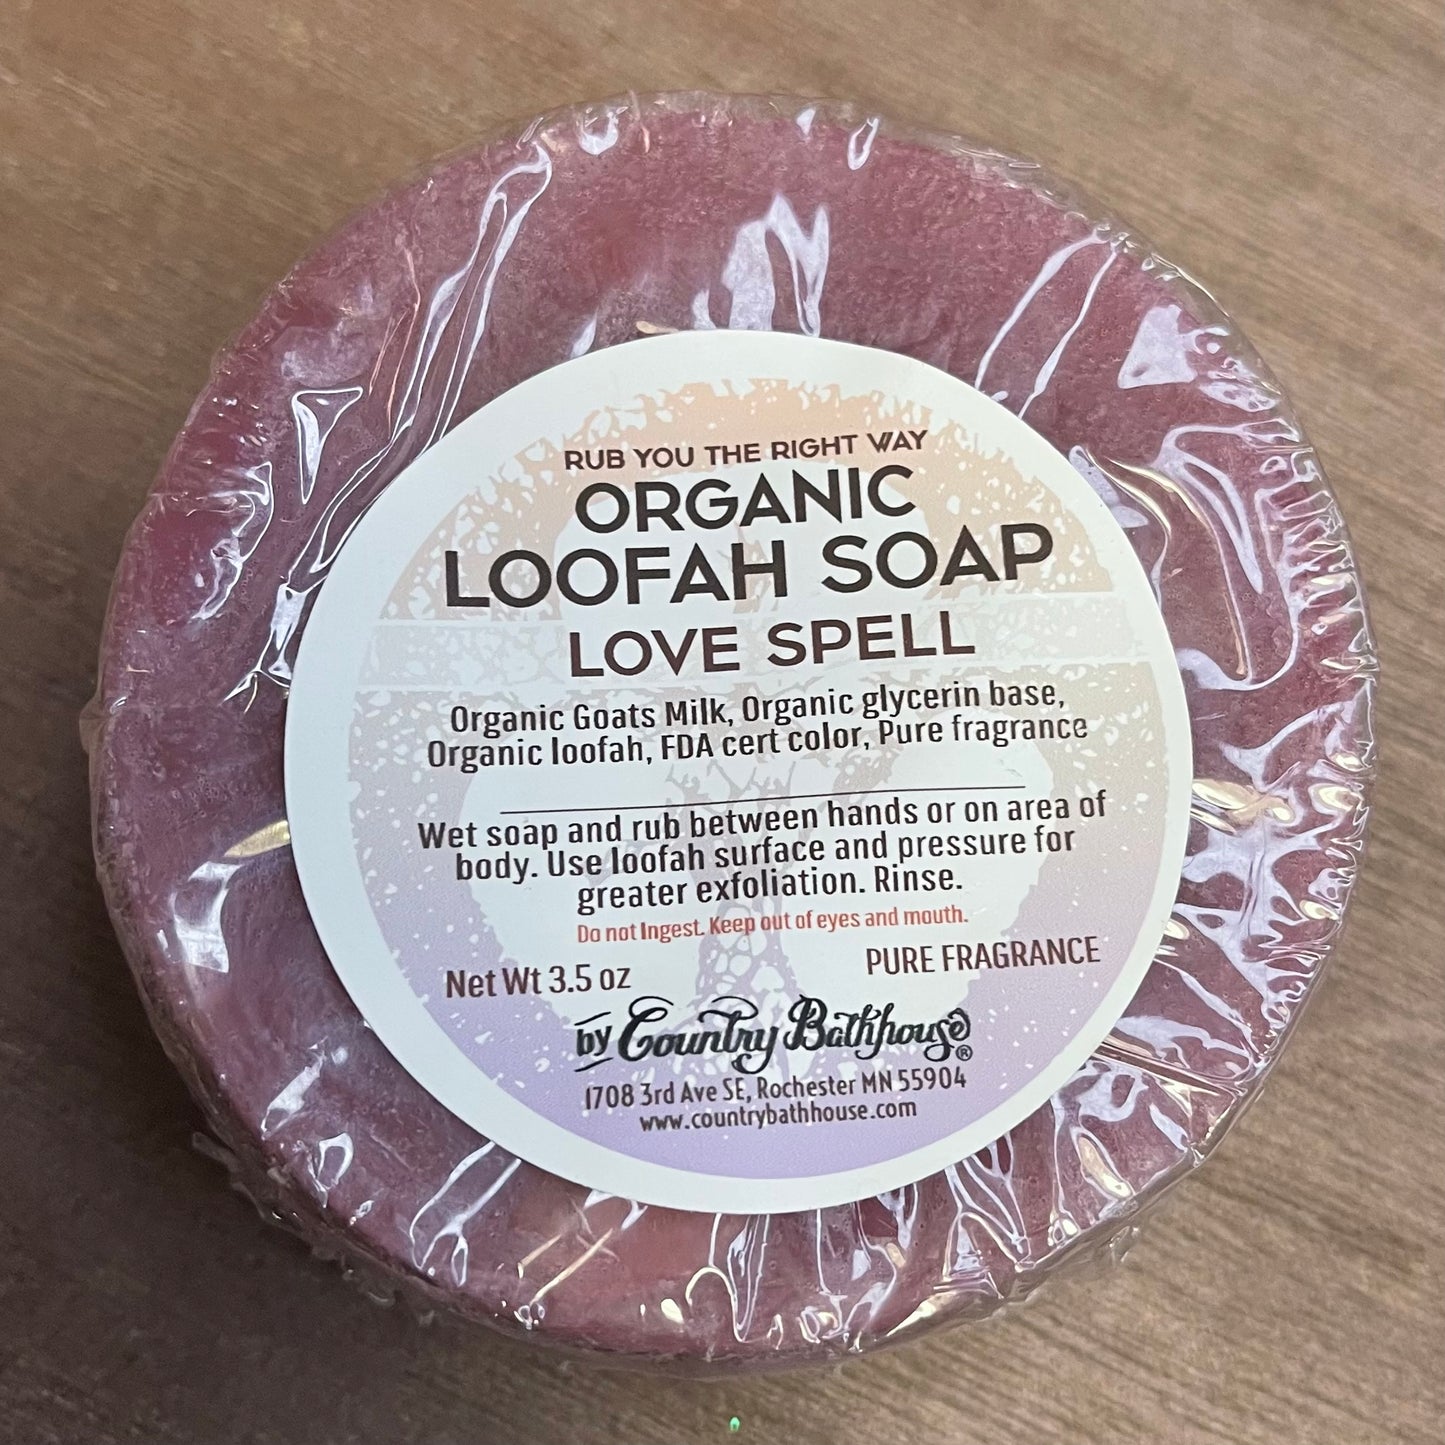 Love Spell Loofah Soap